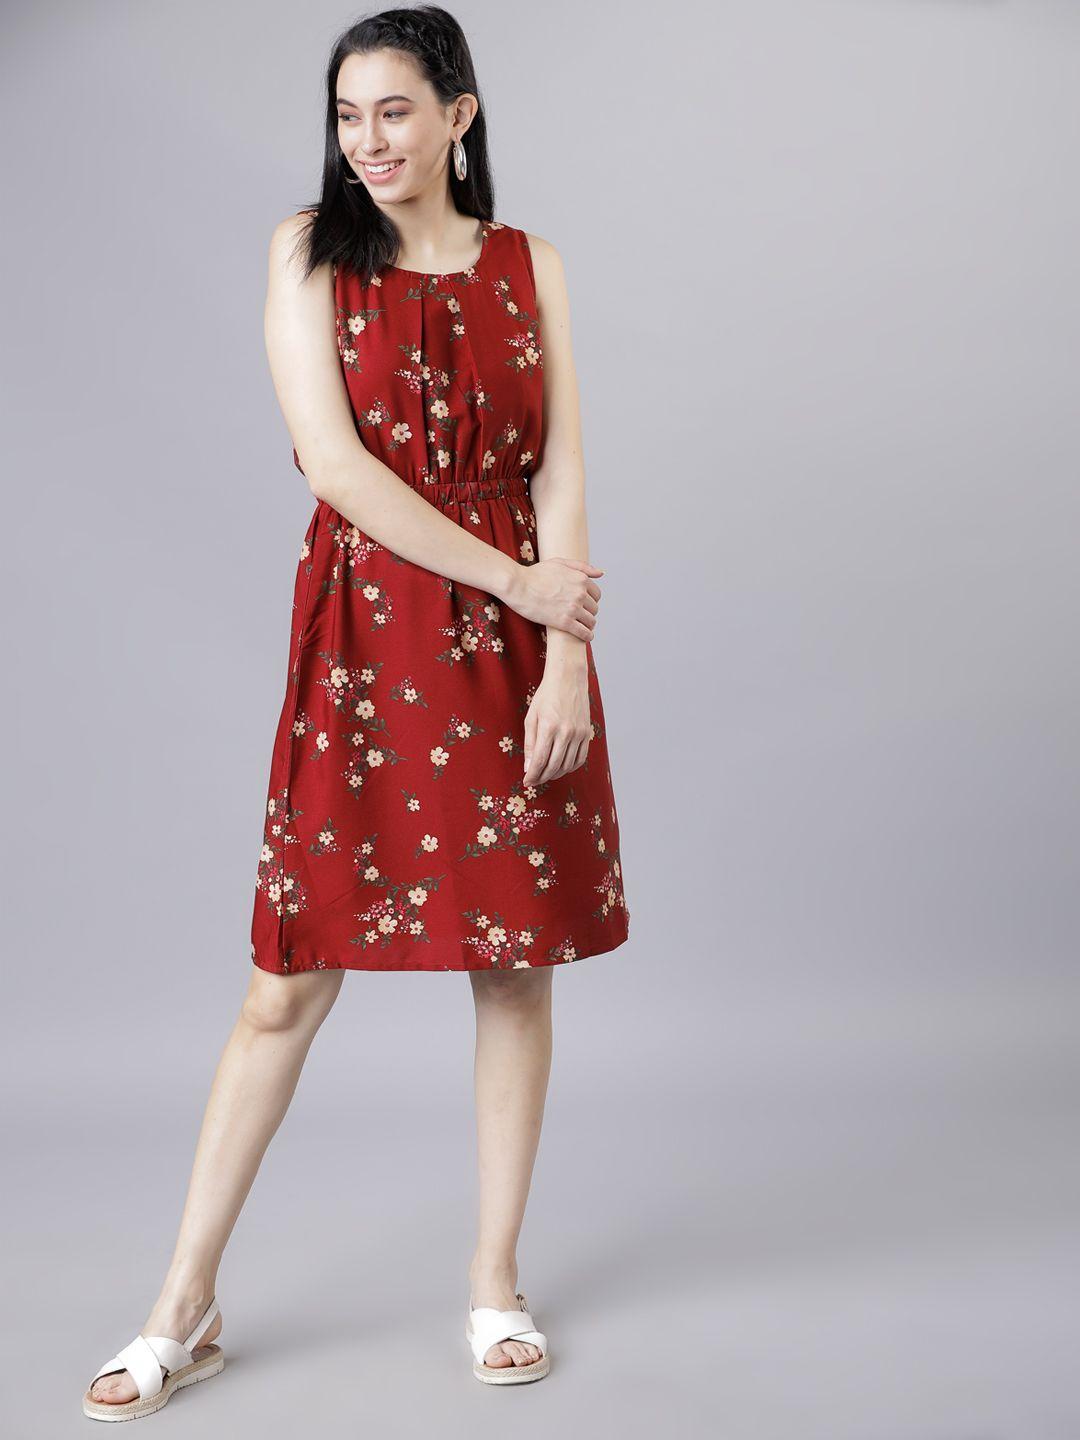 tokyo talkies women red blouson dress